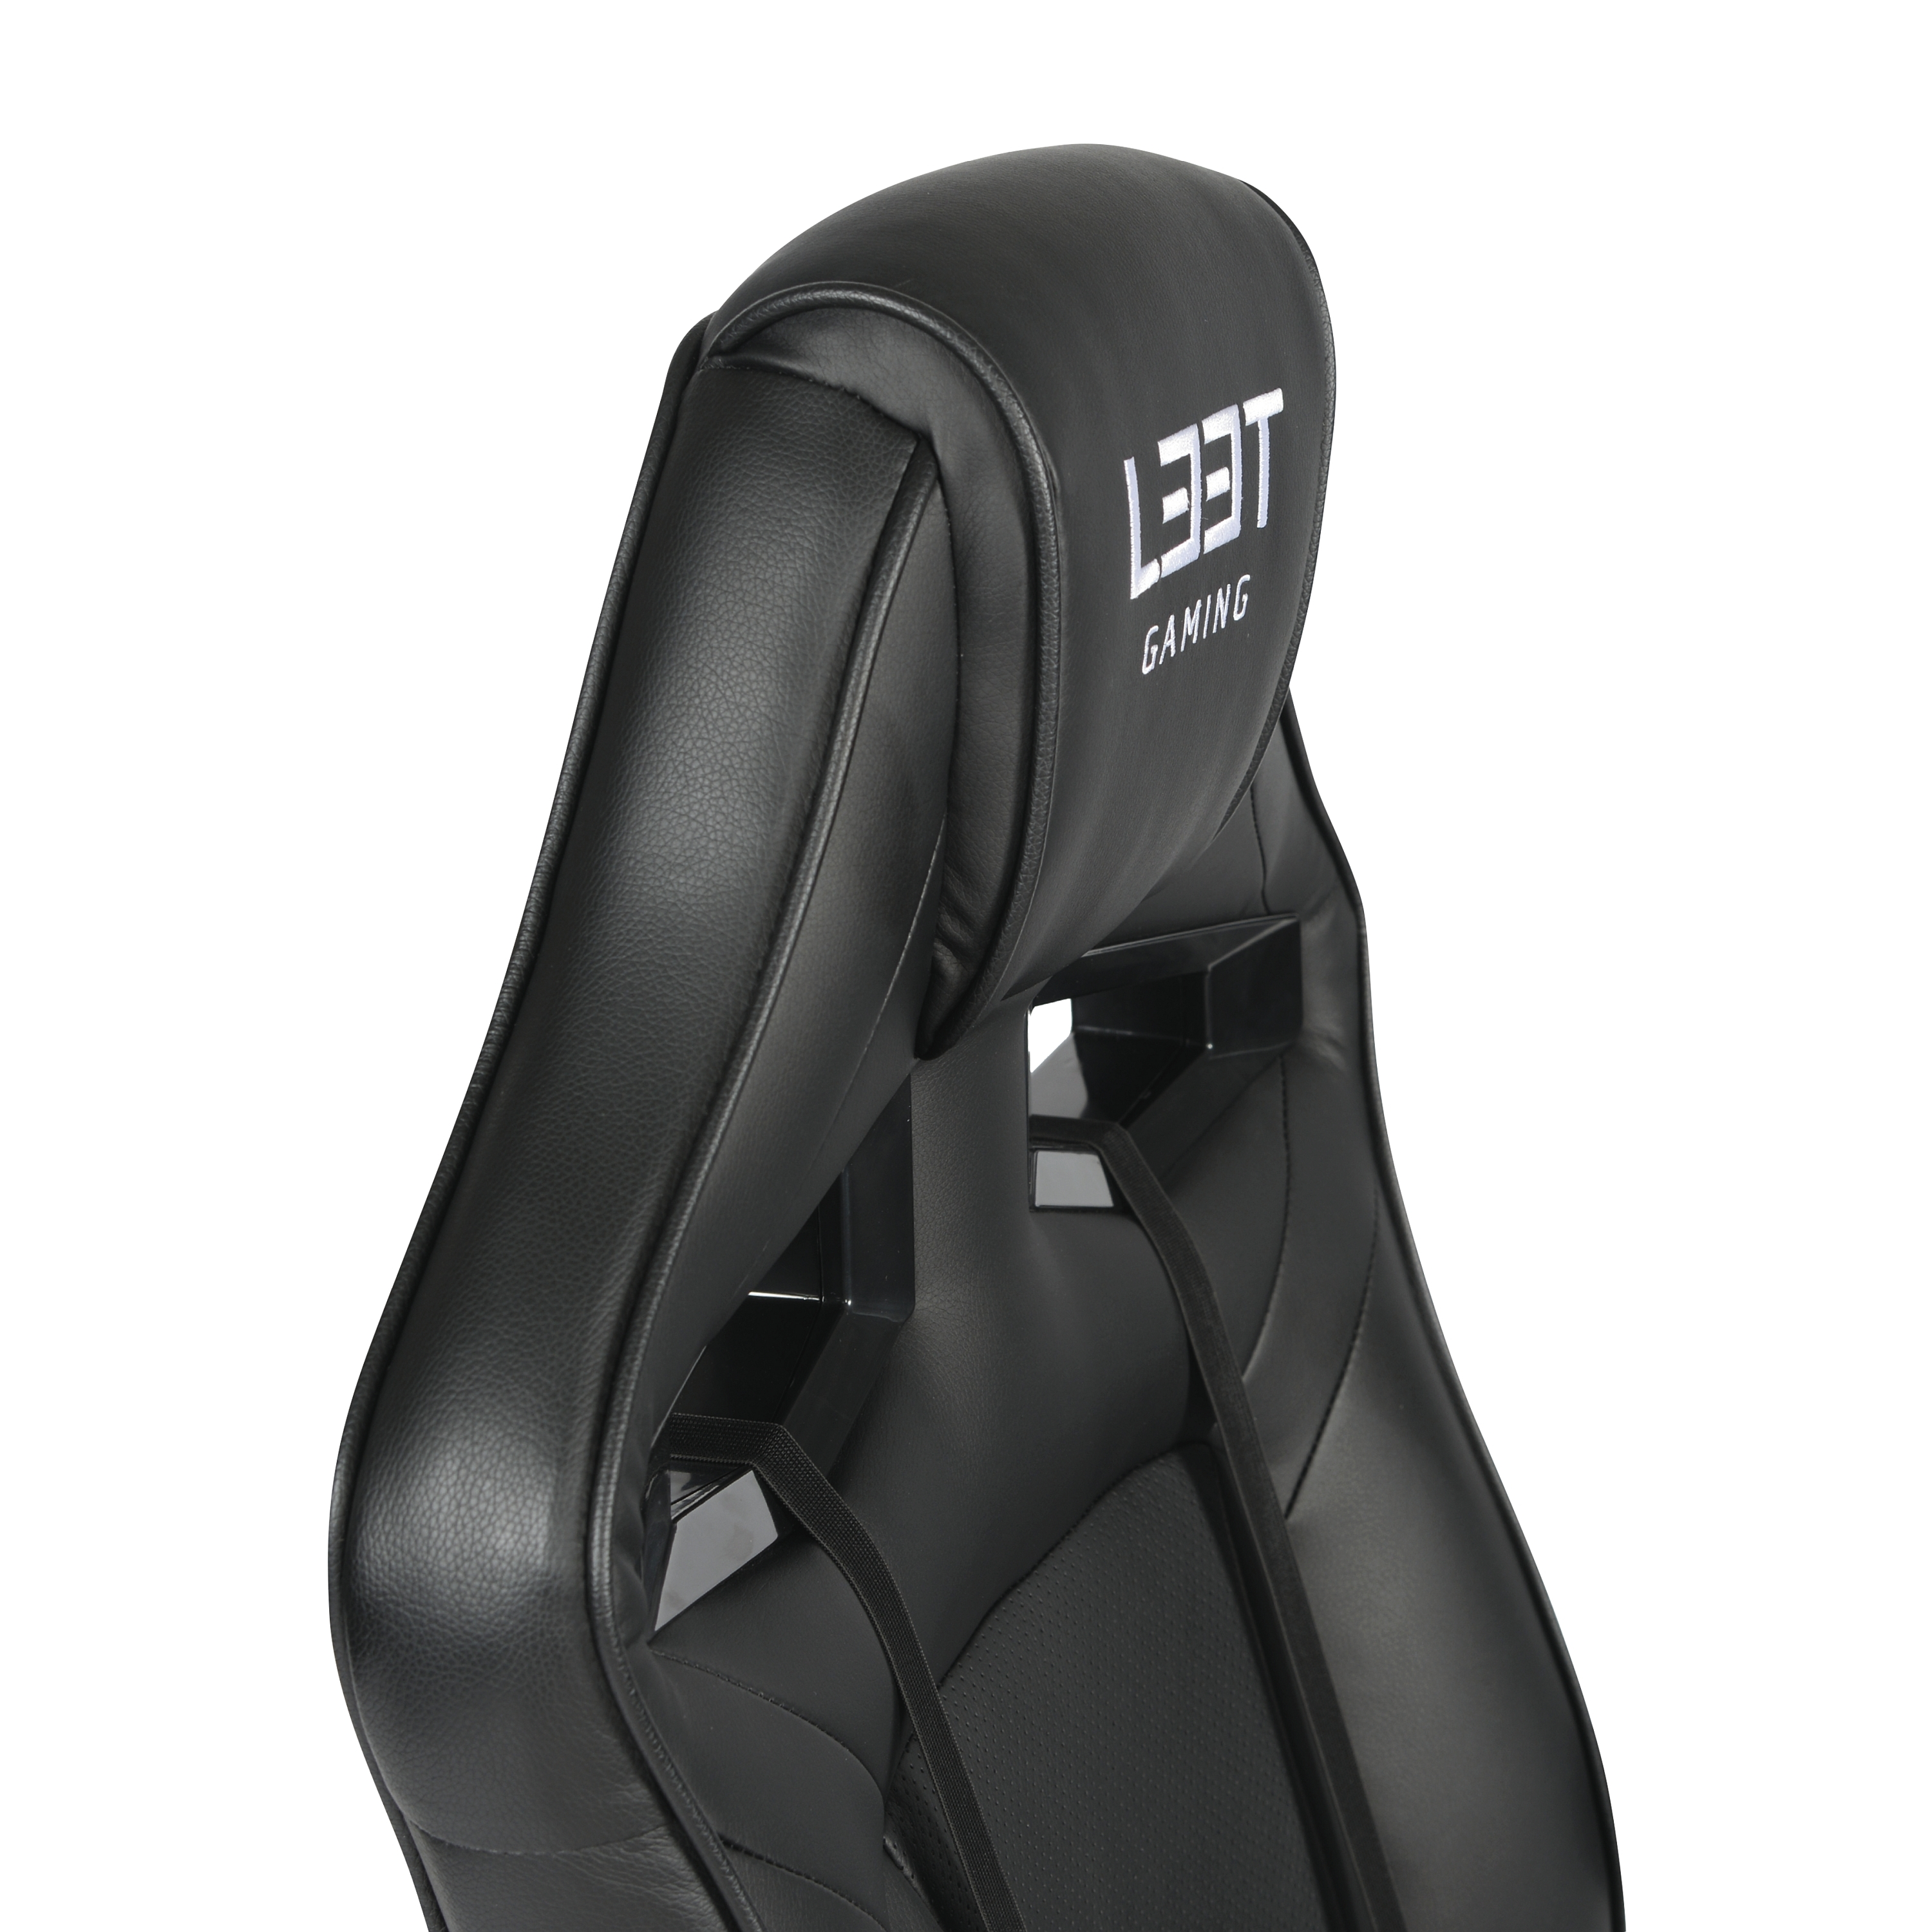 L33T 160565 Stuhl, Gaming schwarz